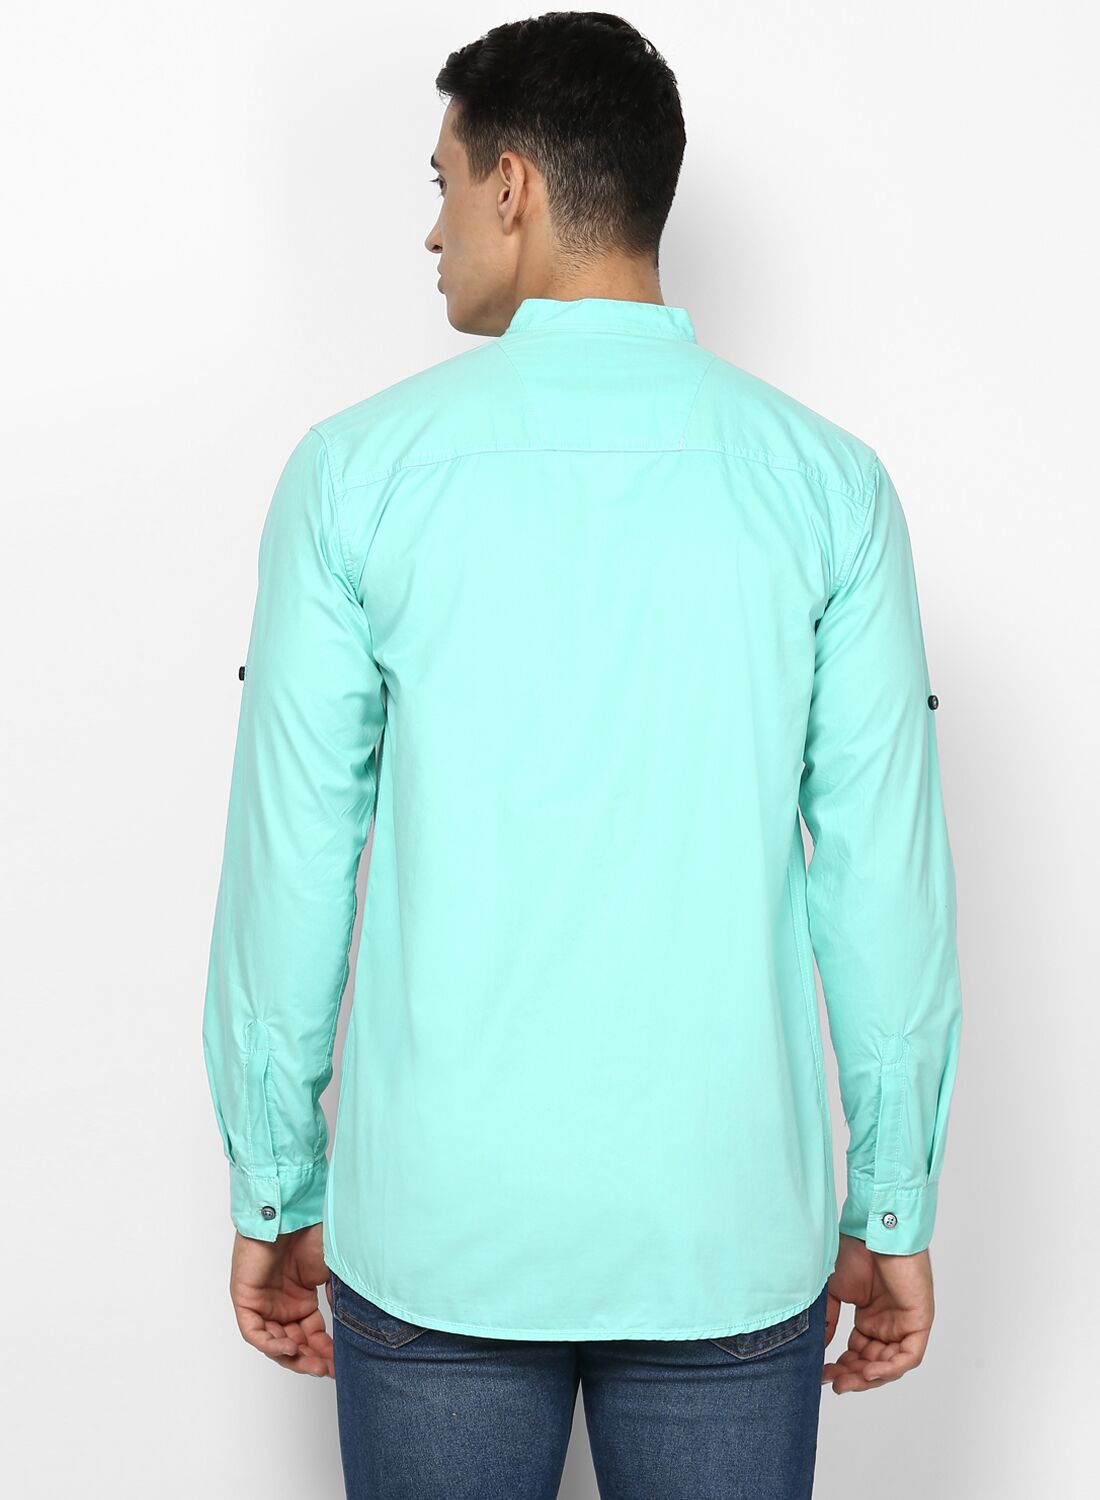 Men's Aqua Blue Cotton Full Sleeve Shirt with Mandarin Collar (Copy)